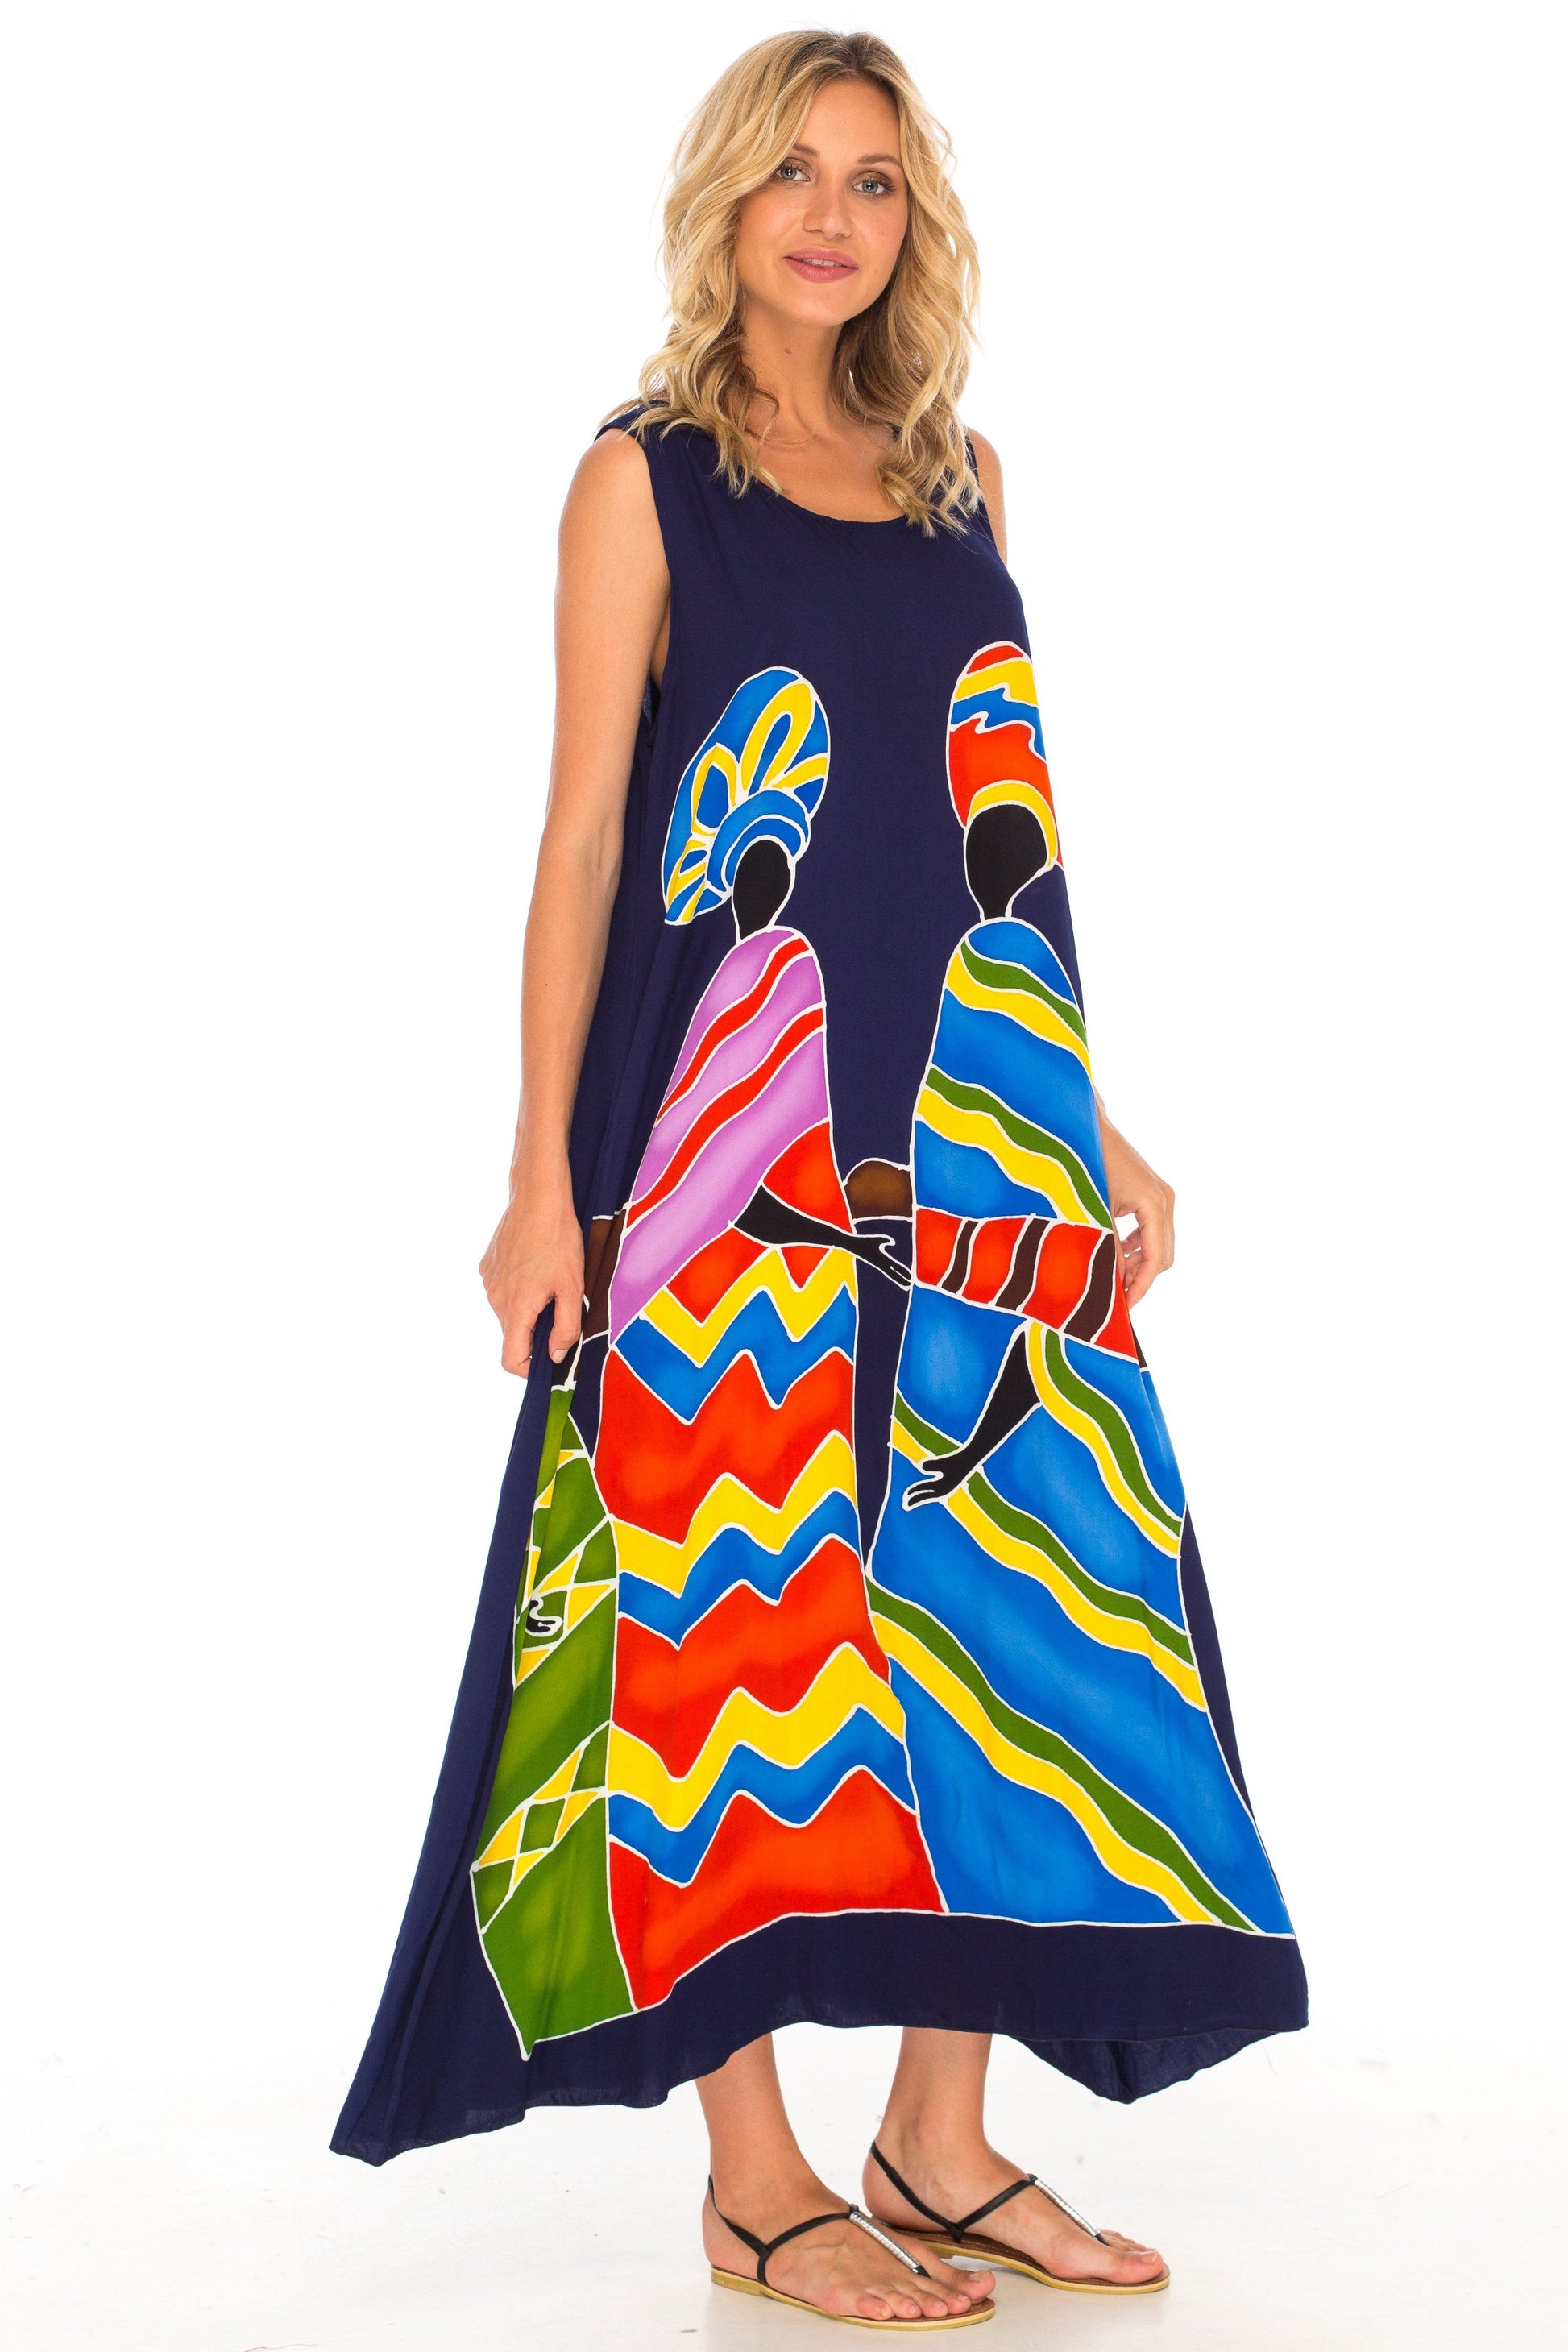 Sleeveless Summer Tank Dress with Hand-painted Tribal Design - Love-ShuShi-Navy Blue dress